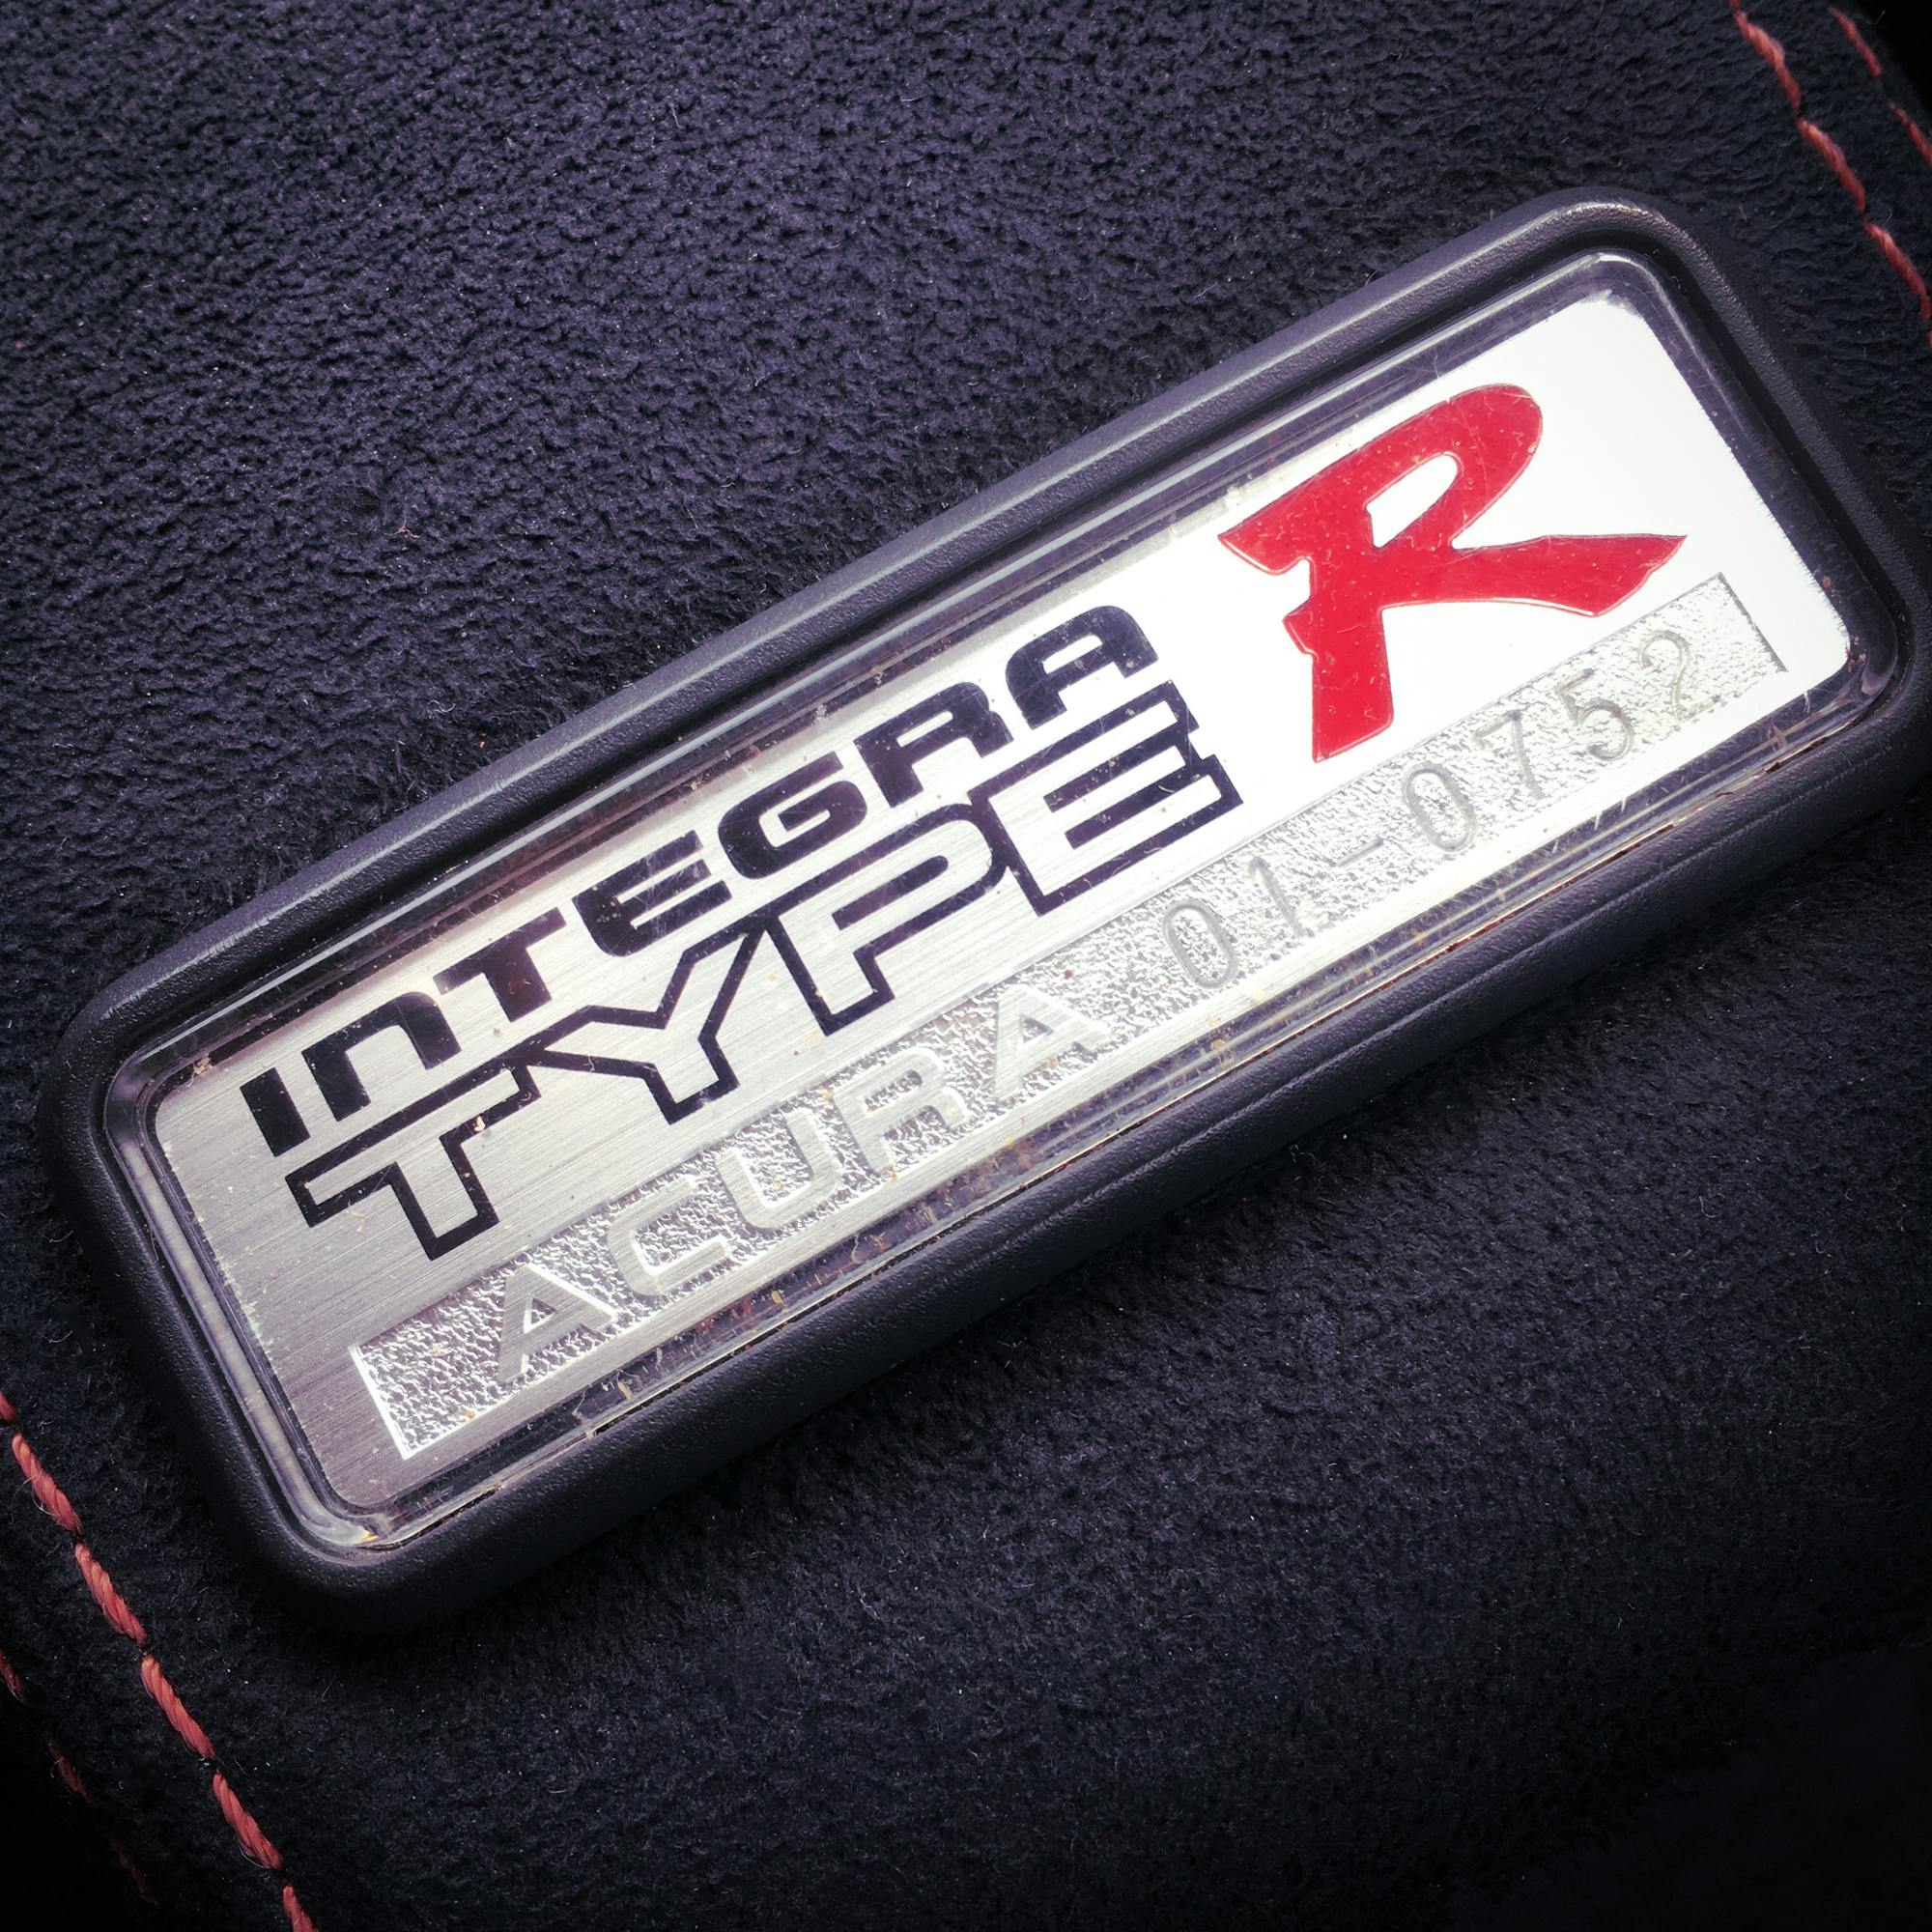 Acura Integra Type R engraved badge